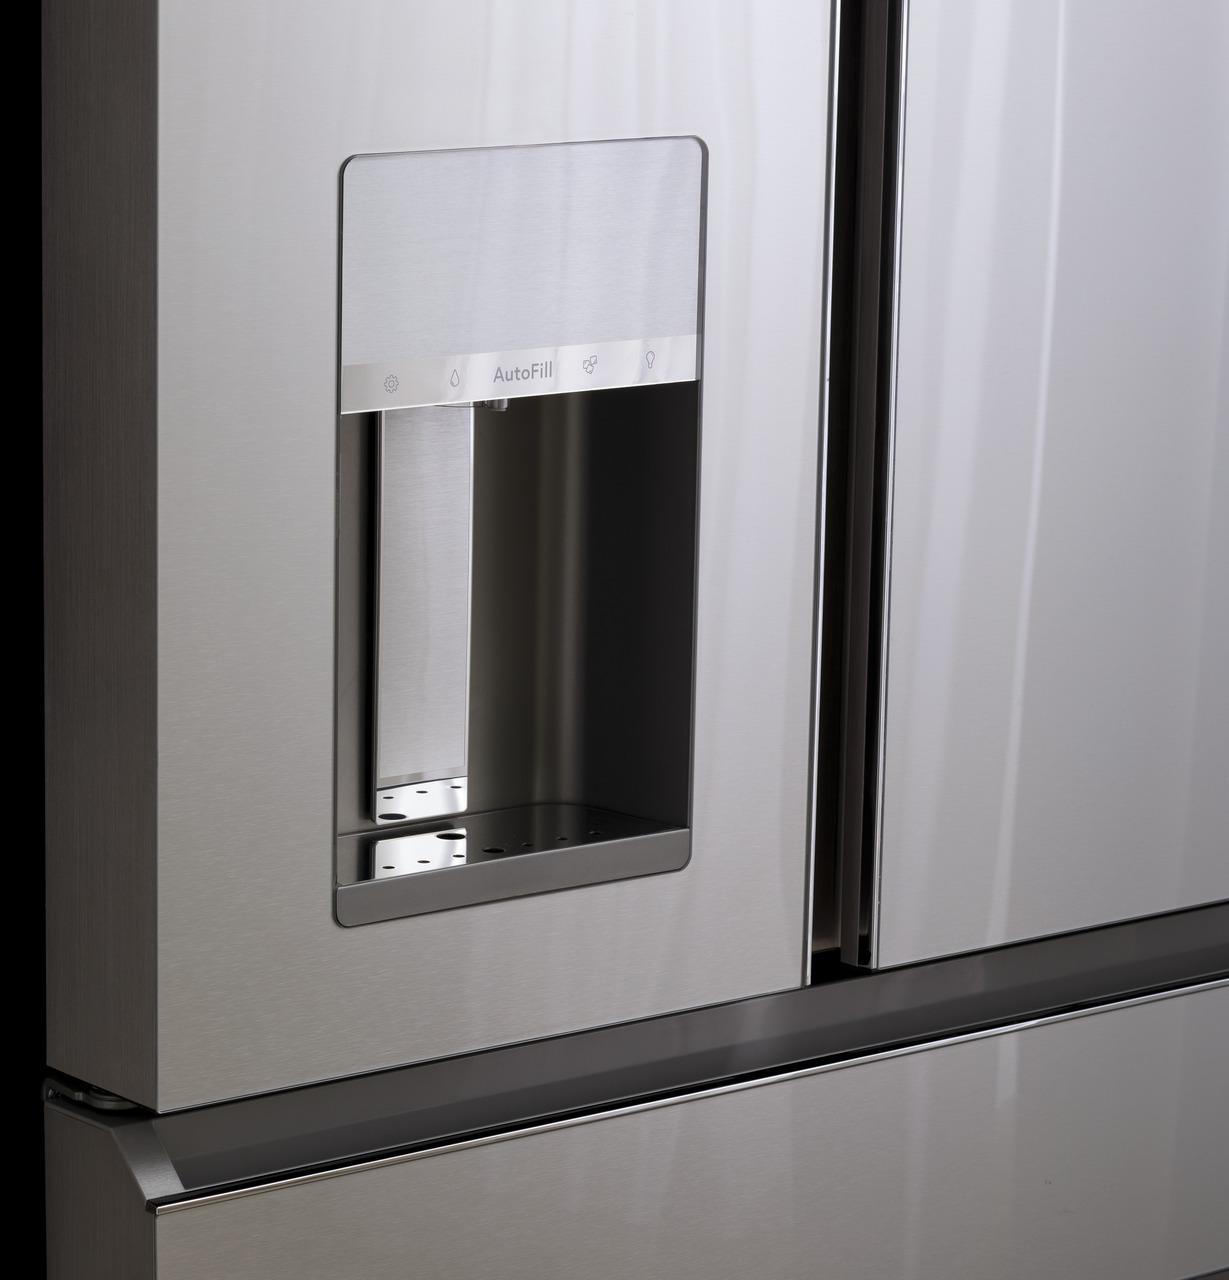 Cafe Caf(eback)™ ENERGY STAR® 27.8 Cu. Ft. Smart 4-Door French-Door Refrigerator in Platinum Glass